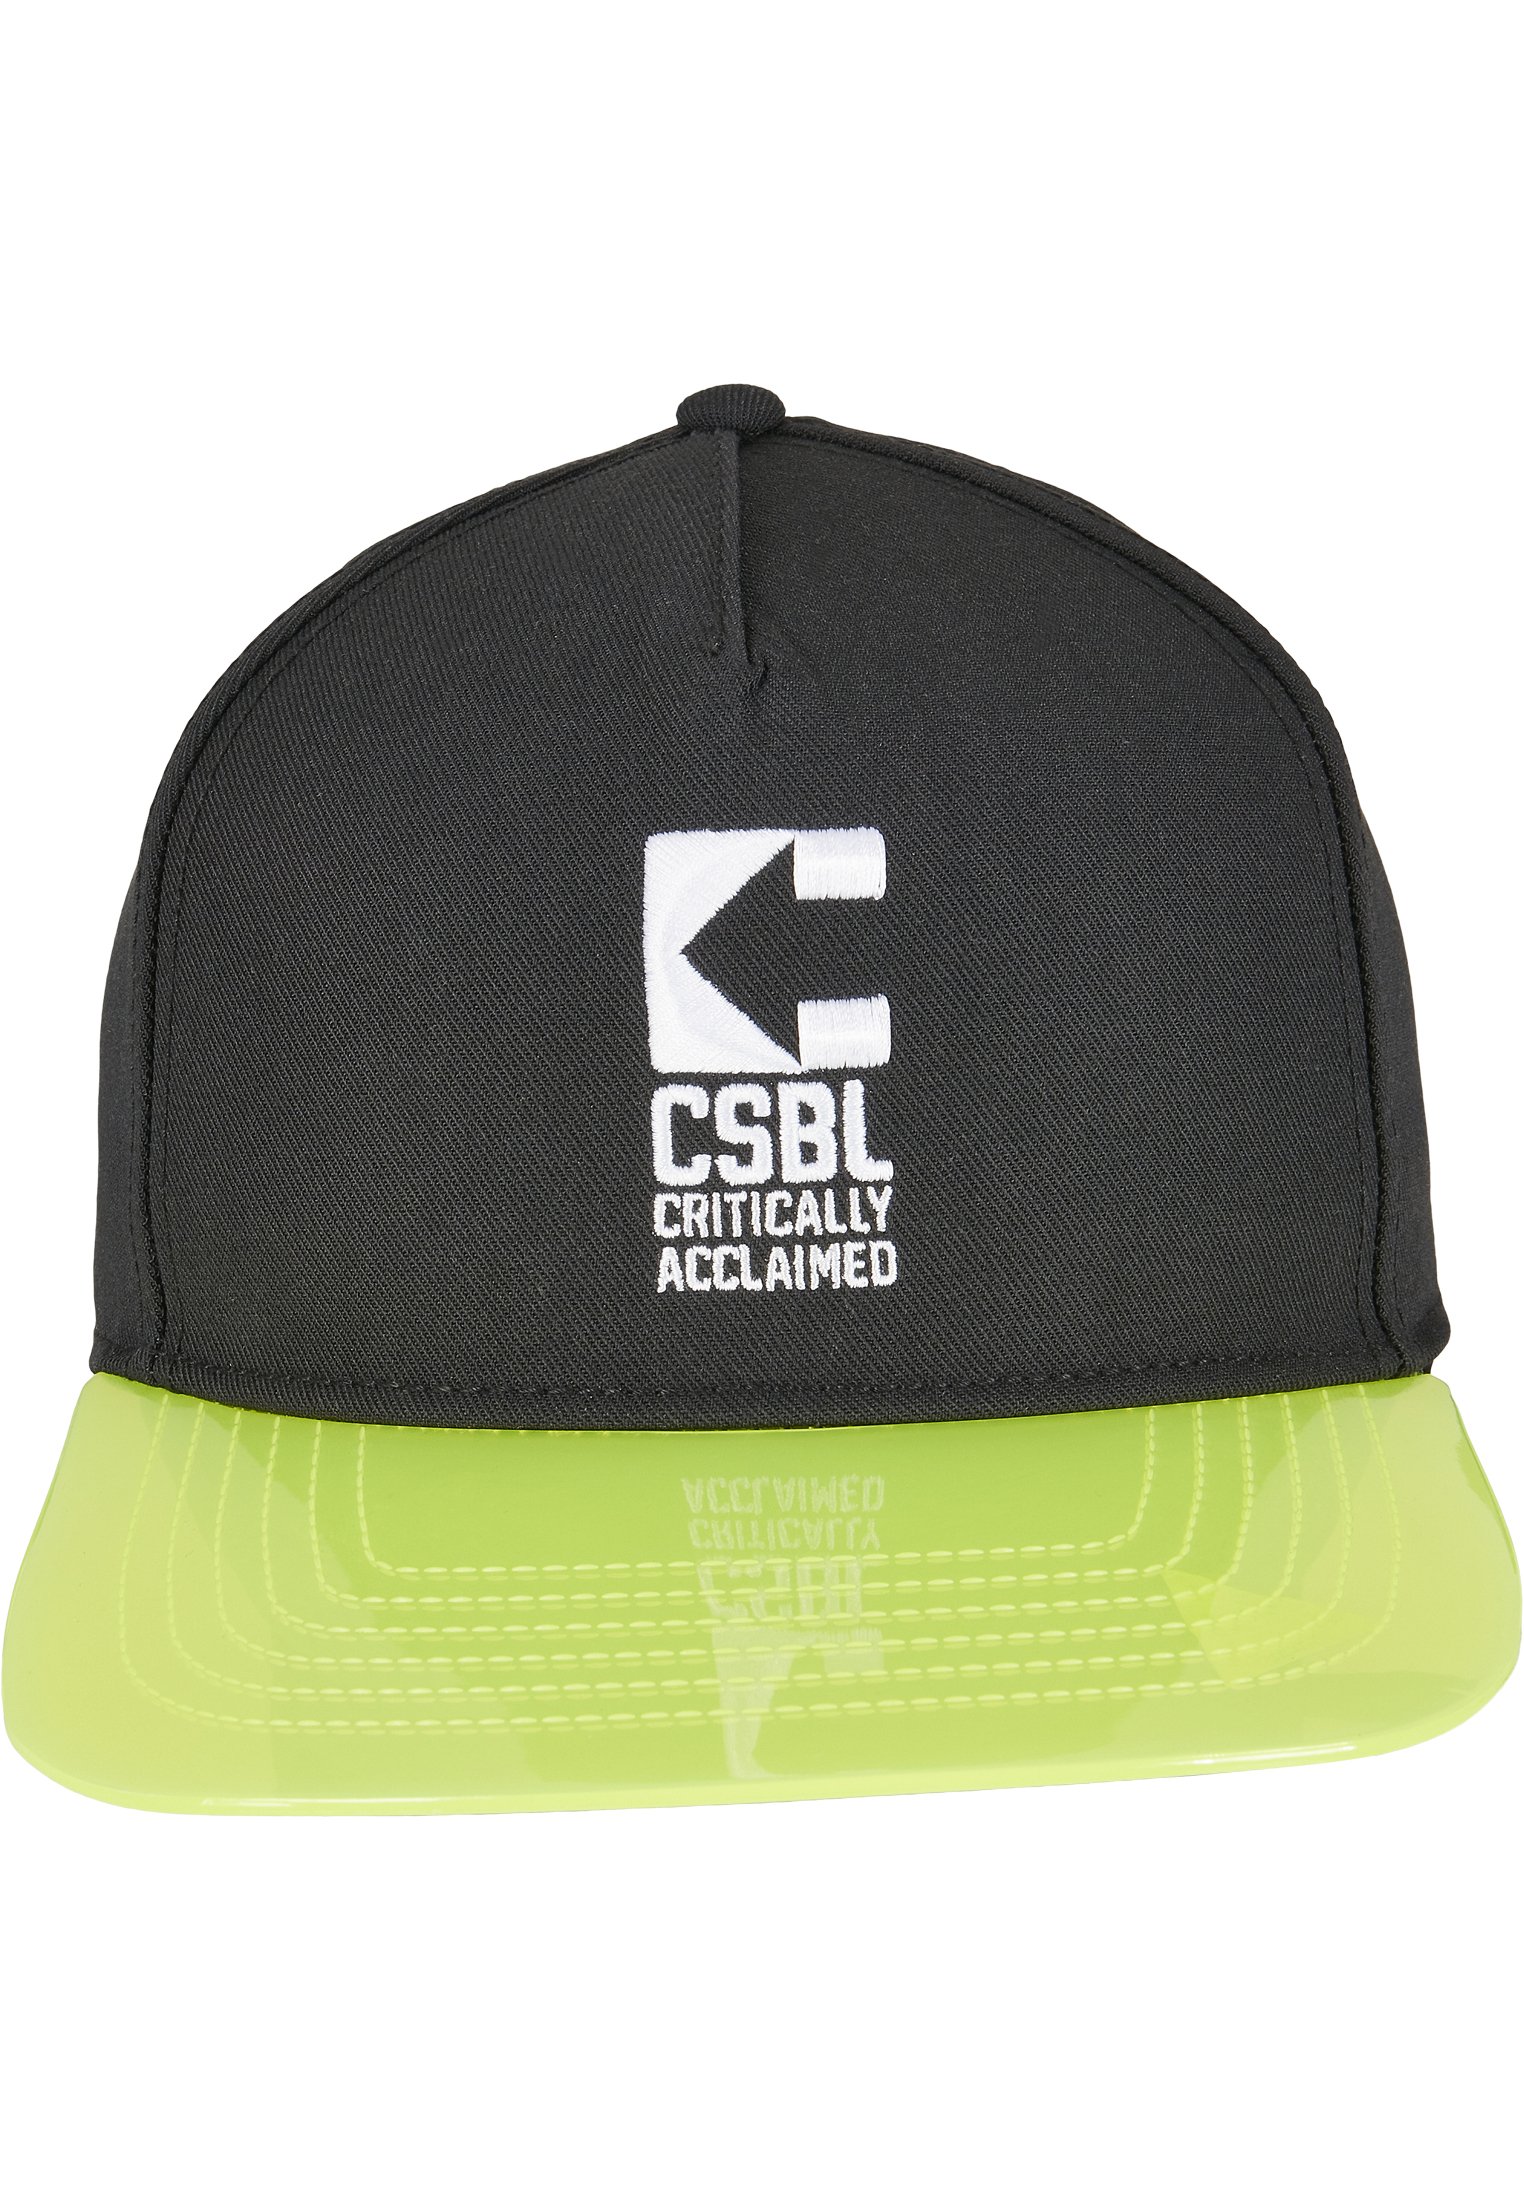 CSBL Critically Acclaimed Cap black/volt one size